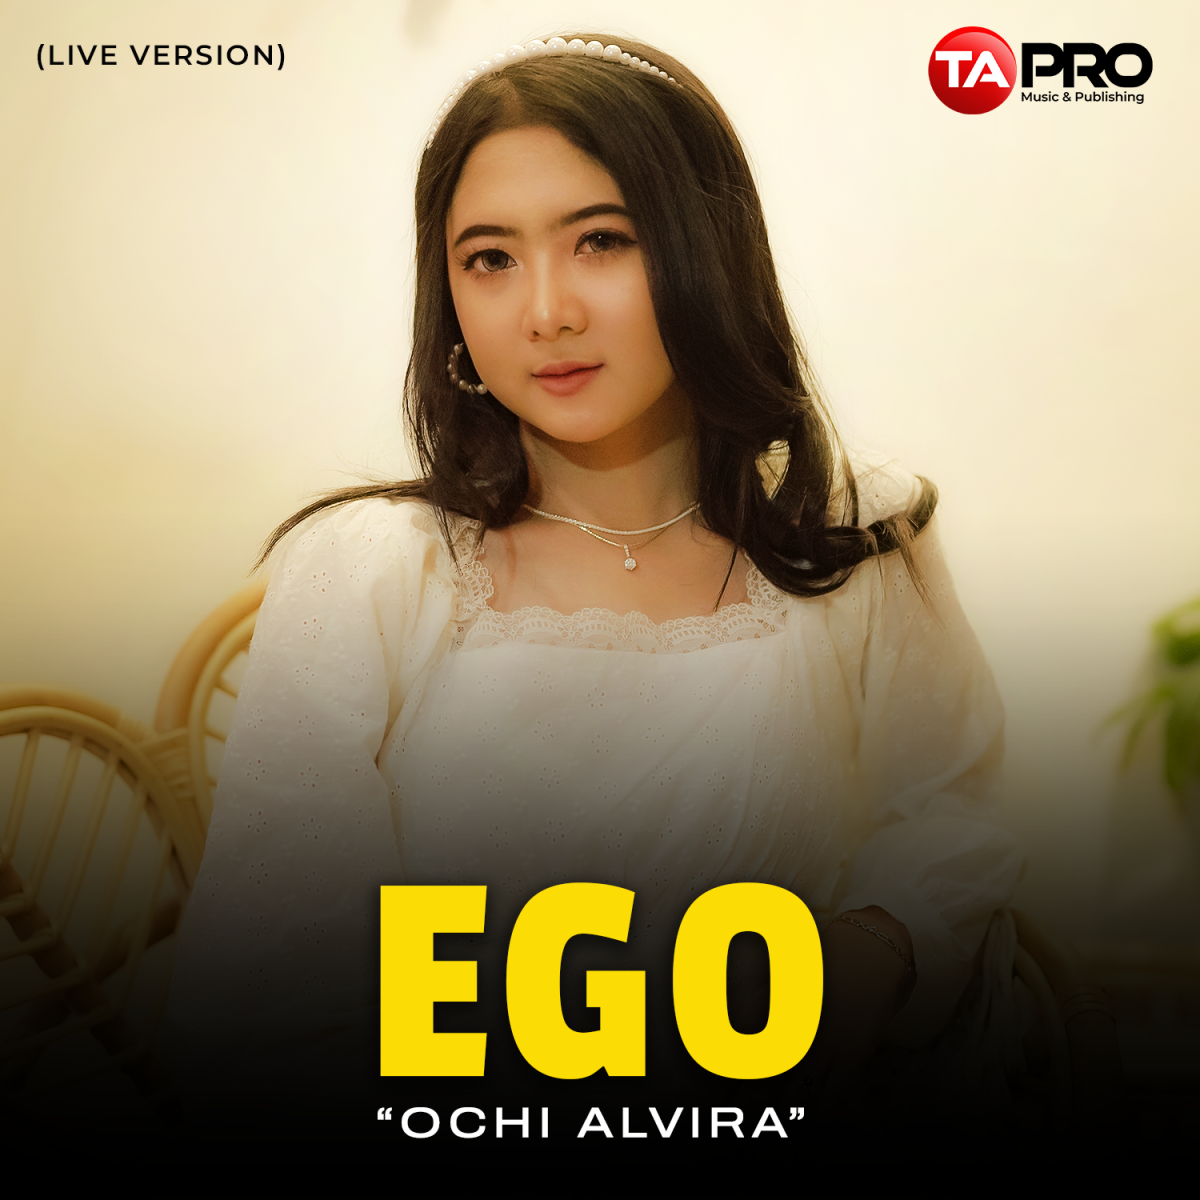 Menggunakan Dress Putih, Ochi Alvira Tampil Cantik di Video Clip Ego!